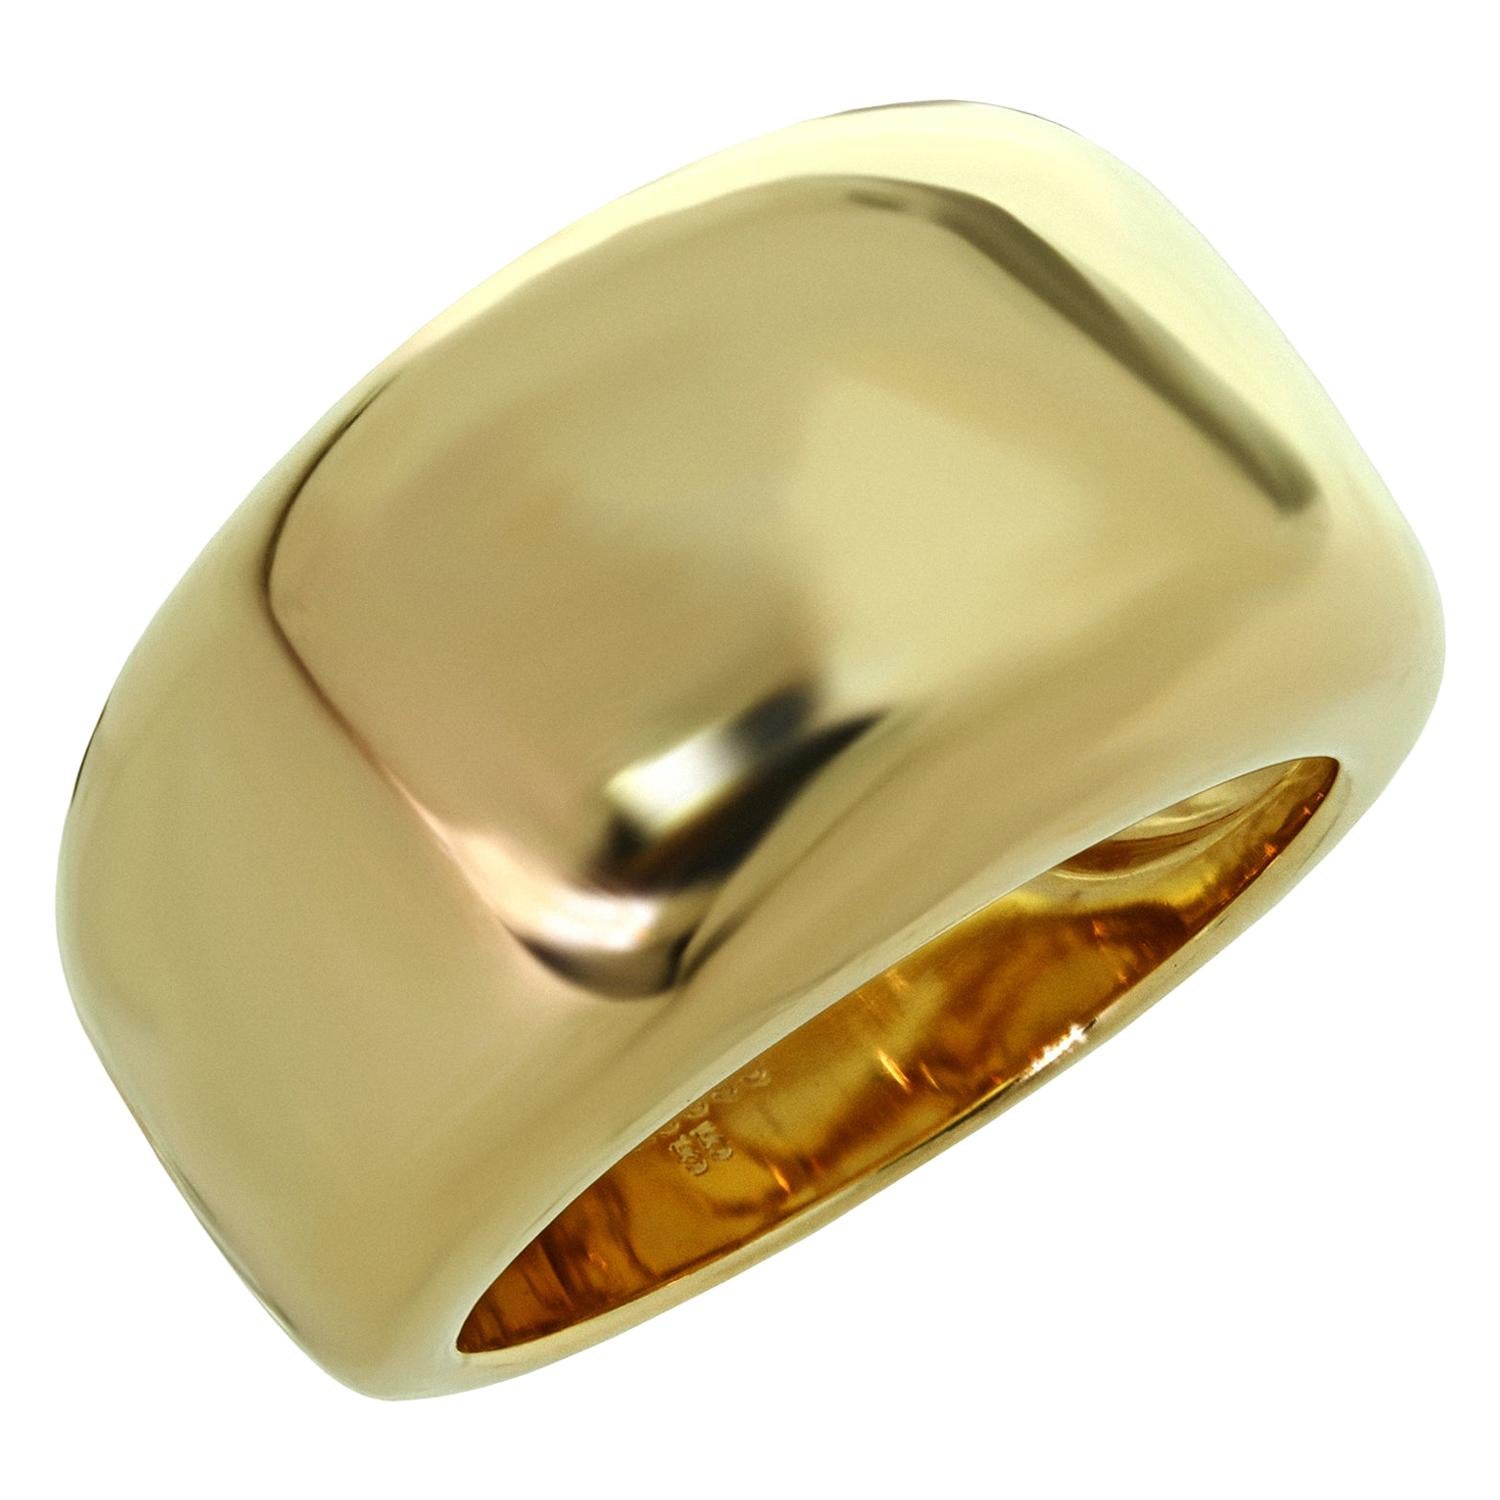 Cartier Nouvelle Vague Yellow Gold Domed Band Ring Sz, EU 55 - US 7.25